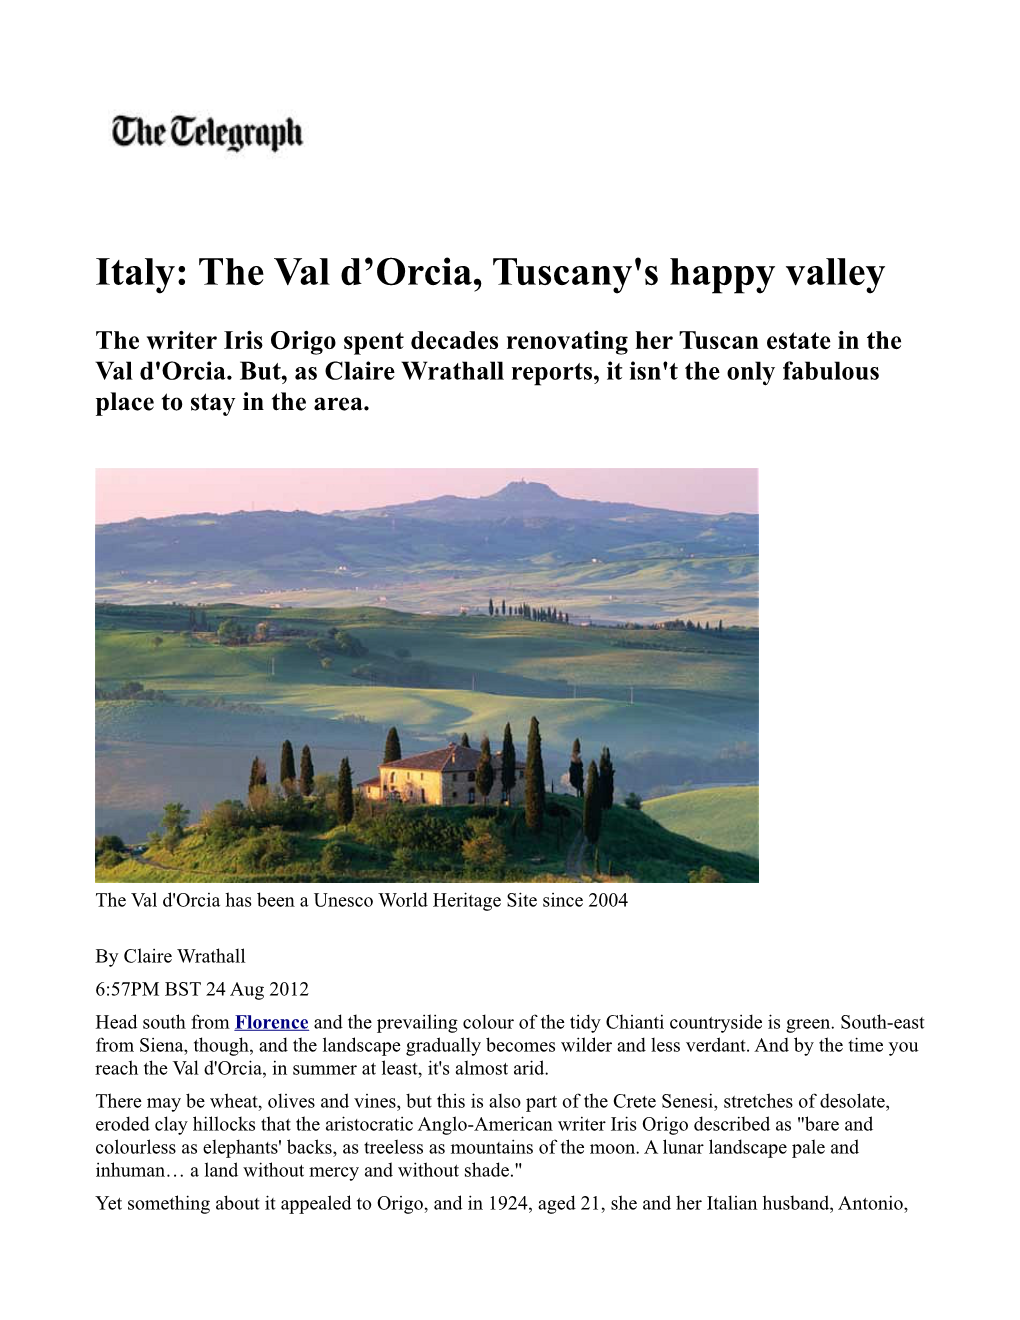 Italy: the Val D’Orcia, Tuscany's Happy Valley